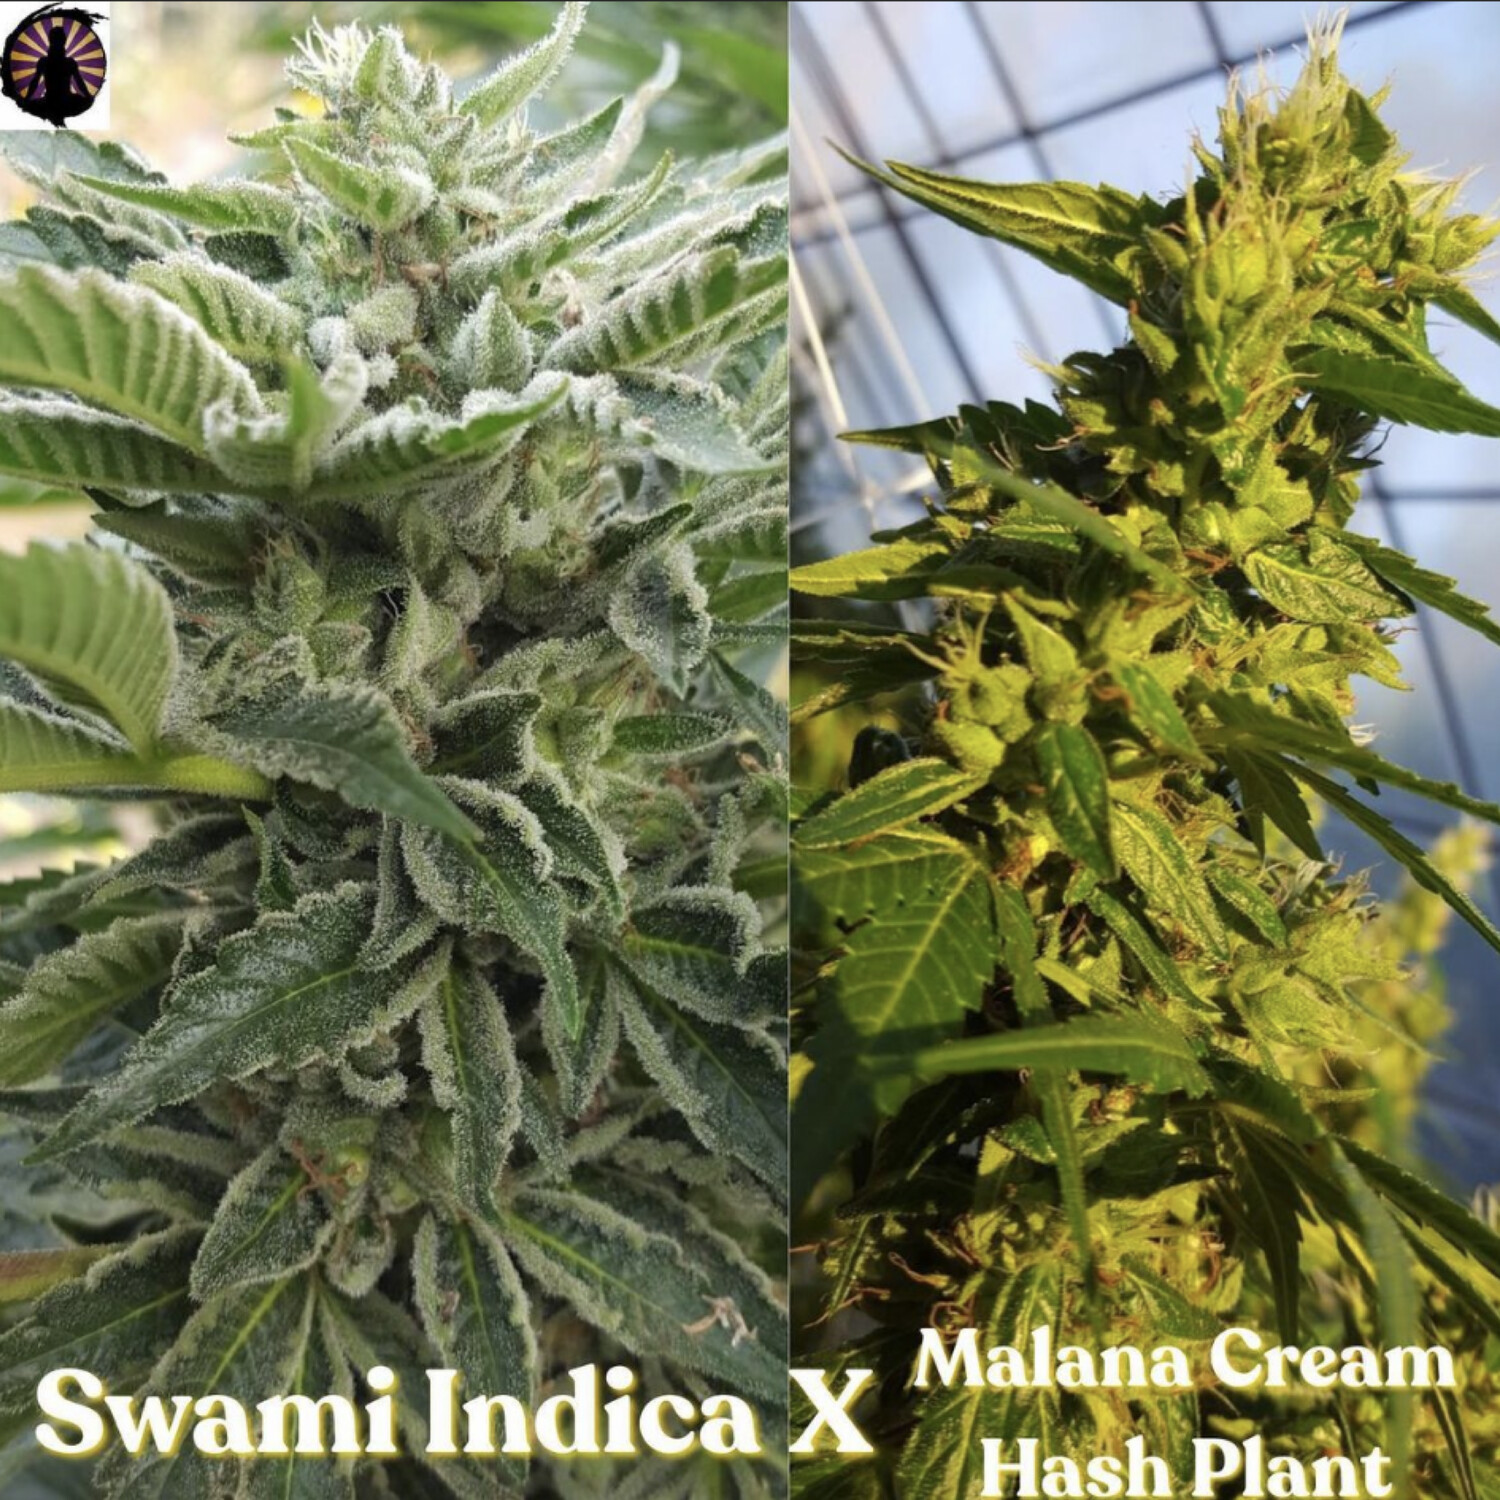 Swami Indica x Malana Cream Hash Plant